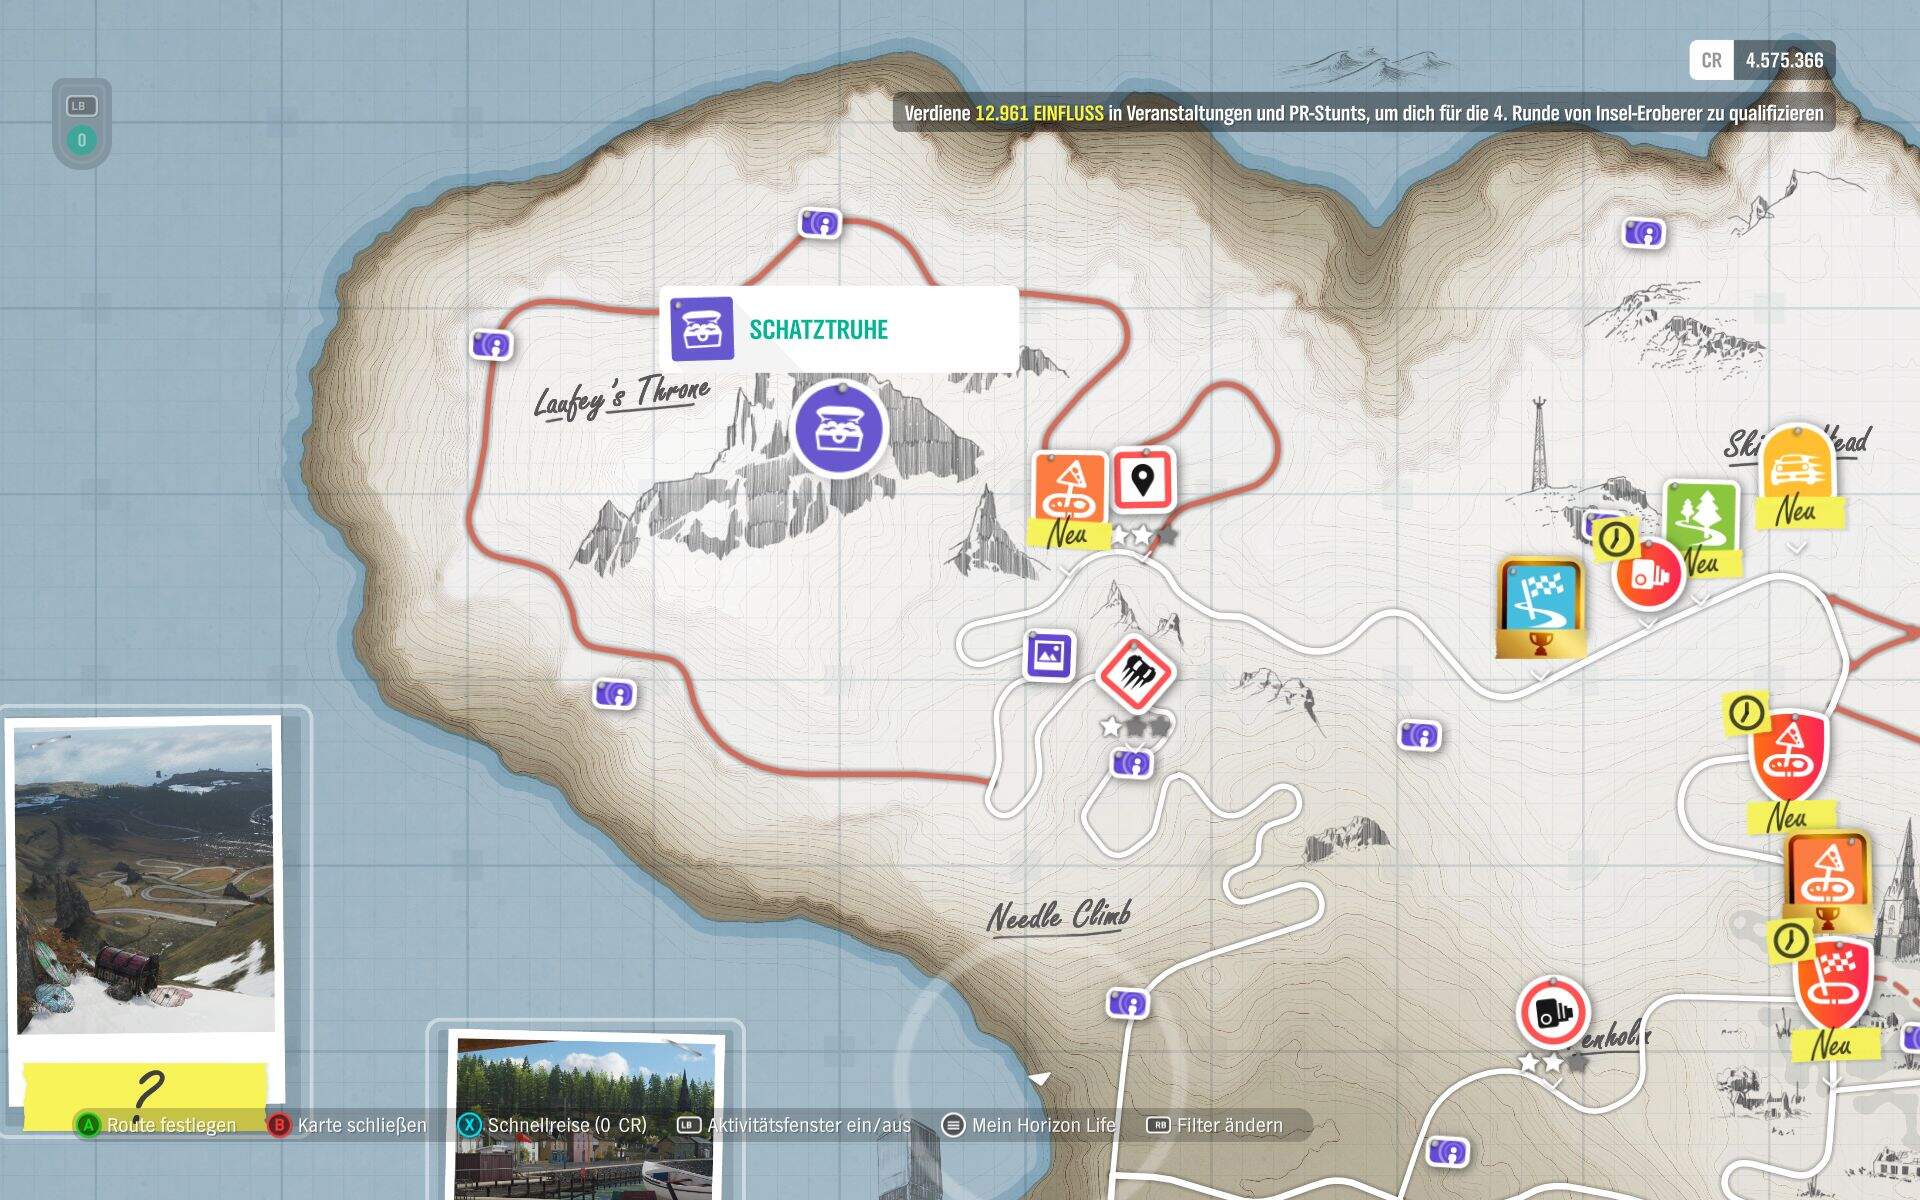 Horizon 4 fortune island. Forza Horizon 4 остров сокровищ карта. Forza Horizon 4 Fortune Island карта. Forza Horizon 4 карта. Сокровища Форчун Айленд Forza Horizon 4.